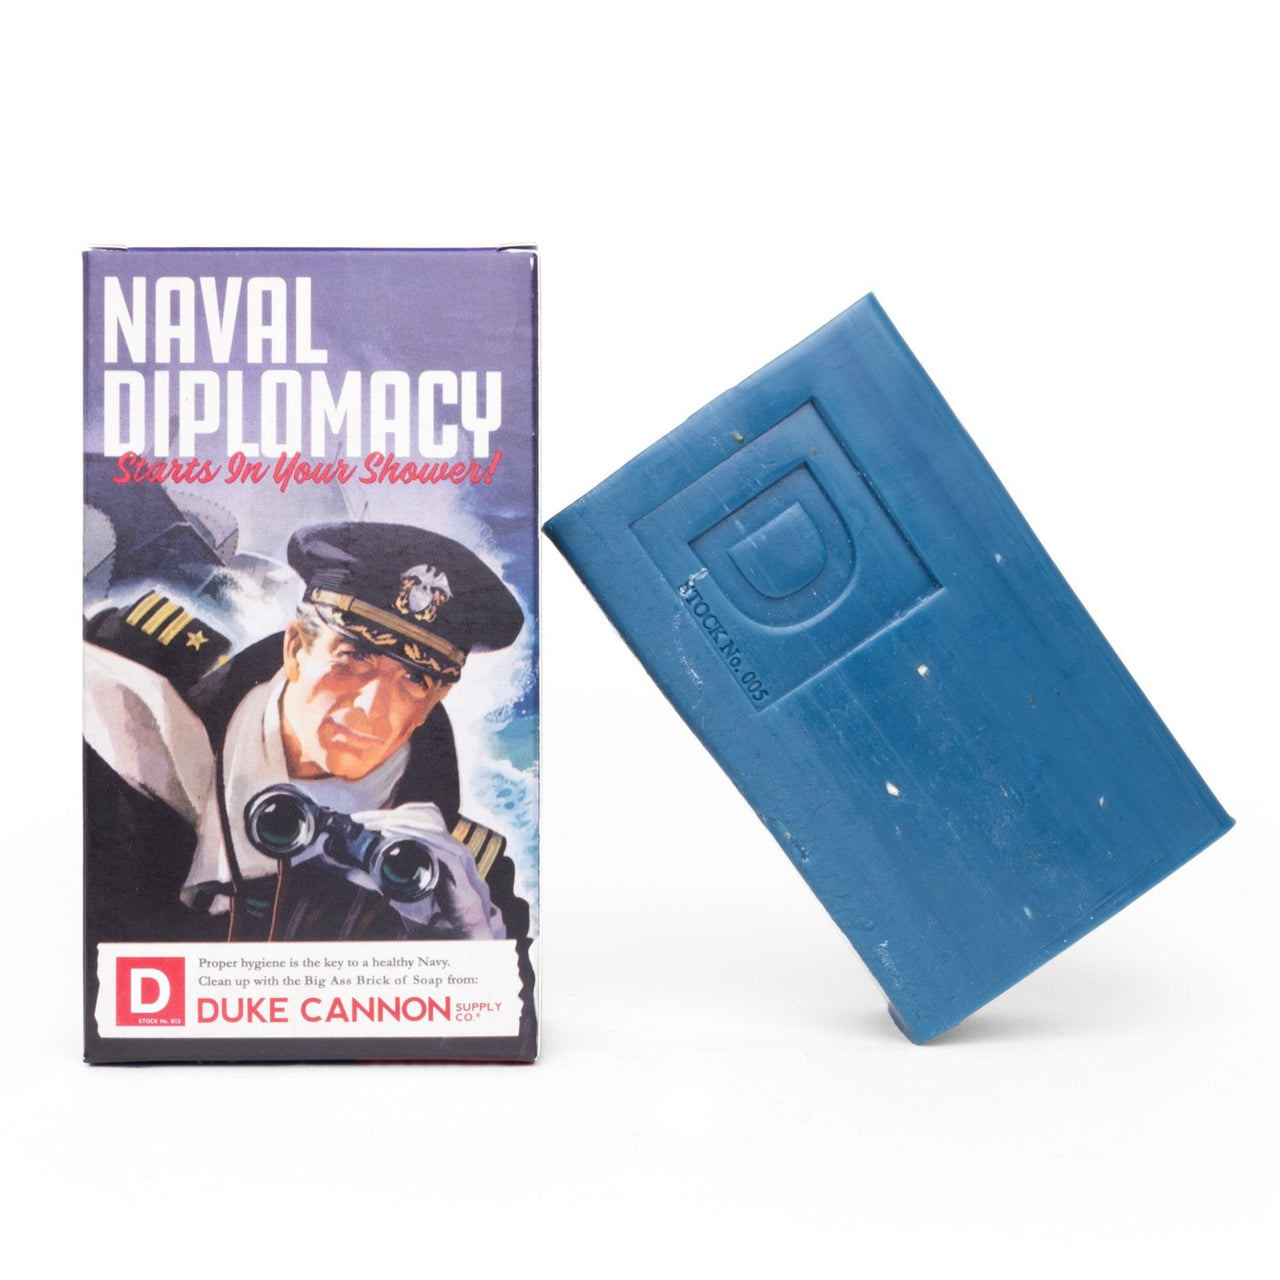 Big Ass Brick of Soap | Naval Diplomacy